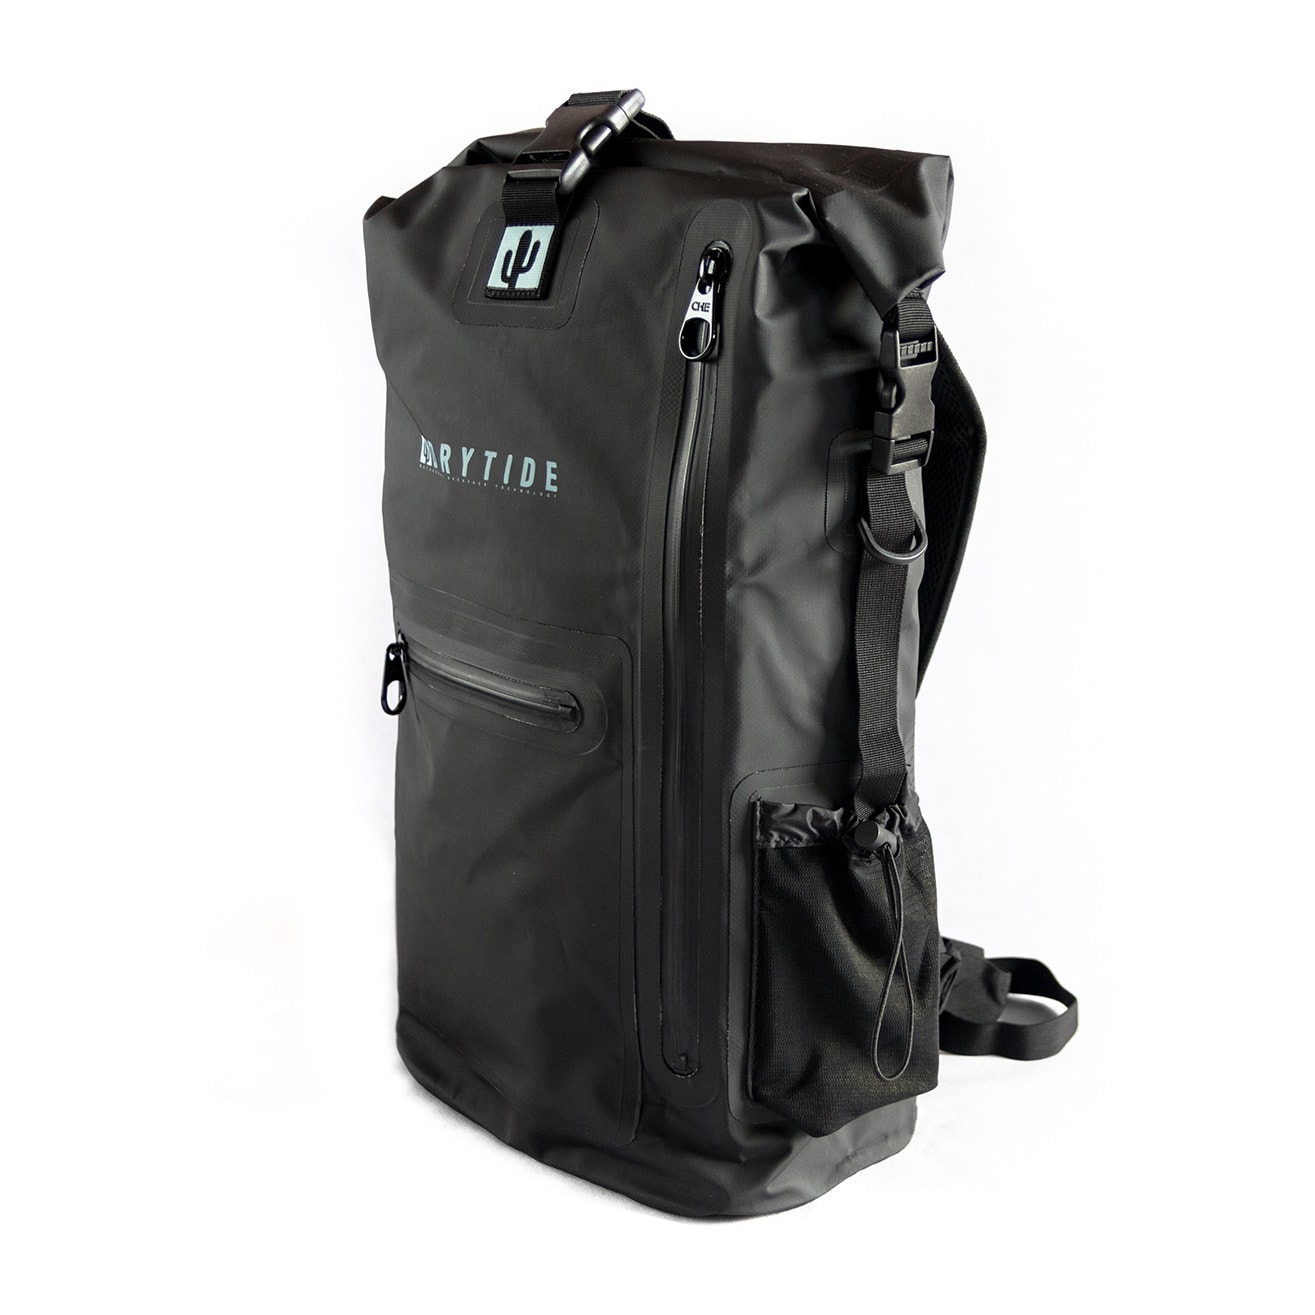 DryTide 30L waterproof backpack square